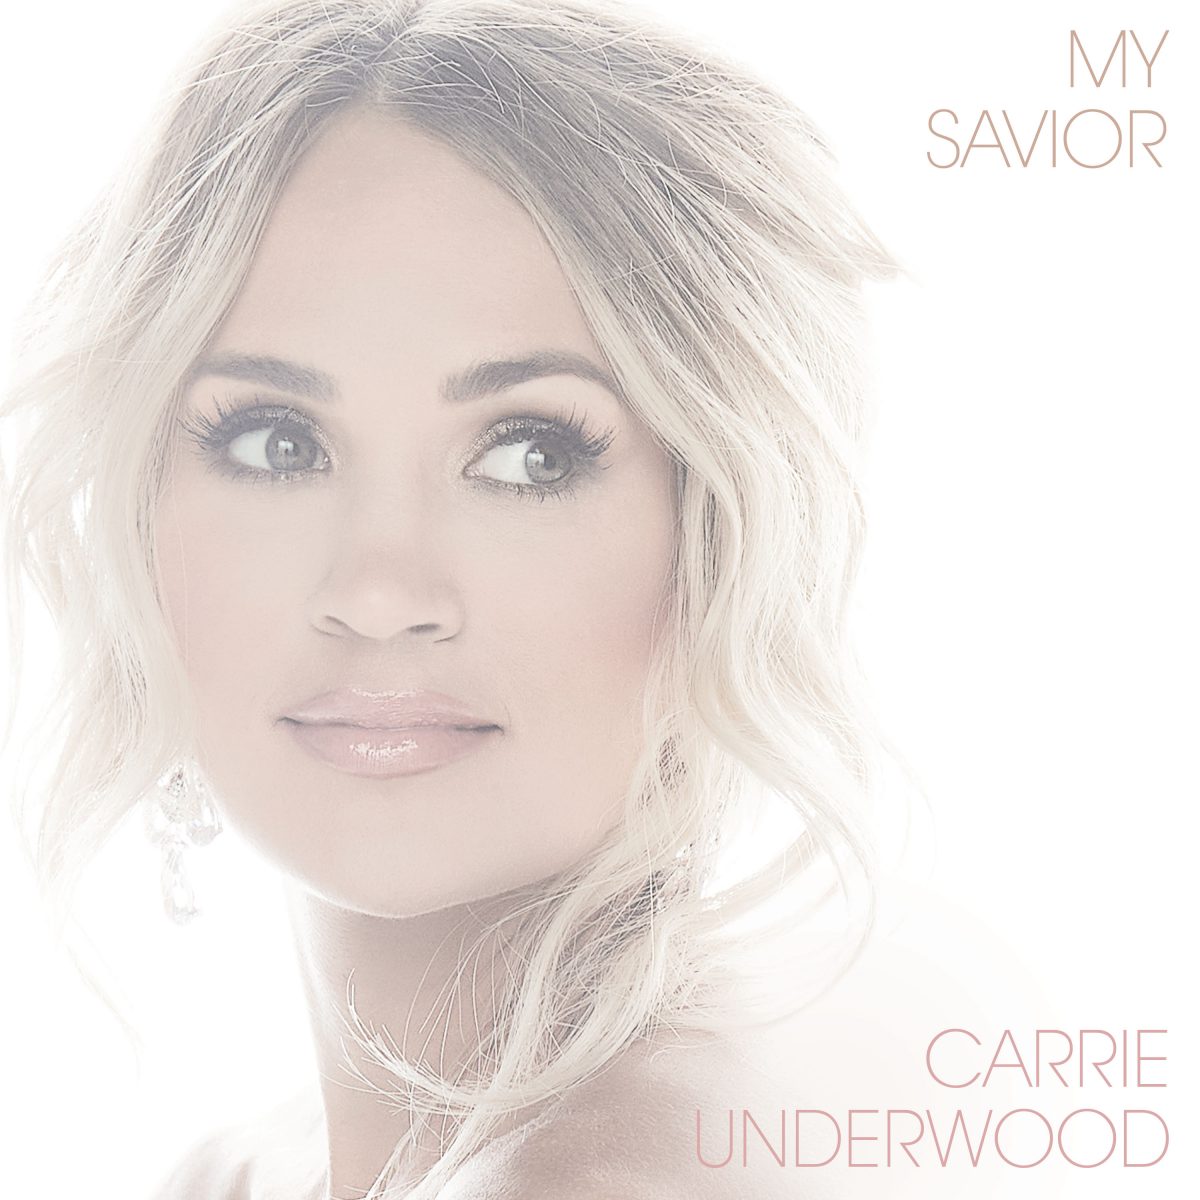 Carrie Underwood’s “My Savior” Opens at No. 1 on Billboard’s Top Album Sales Chart